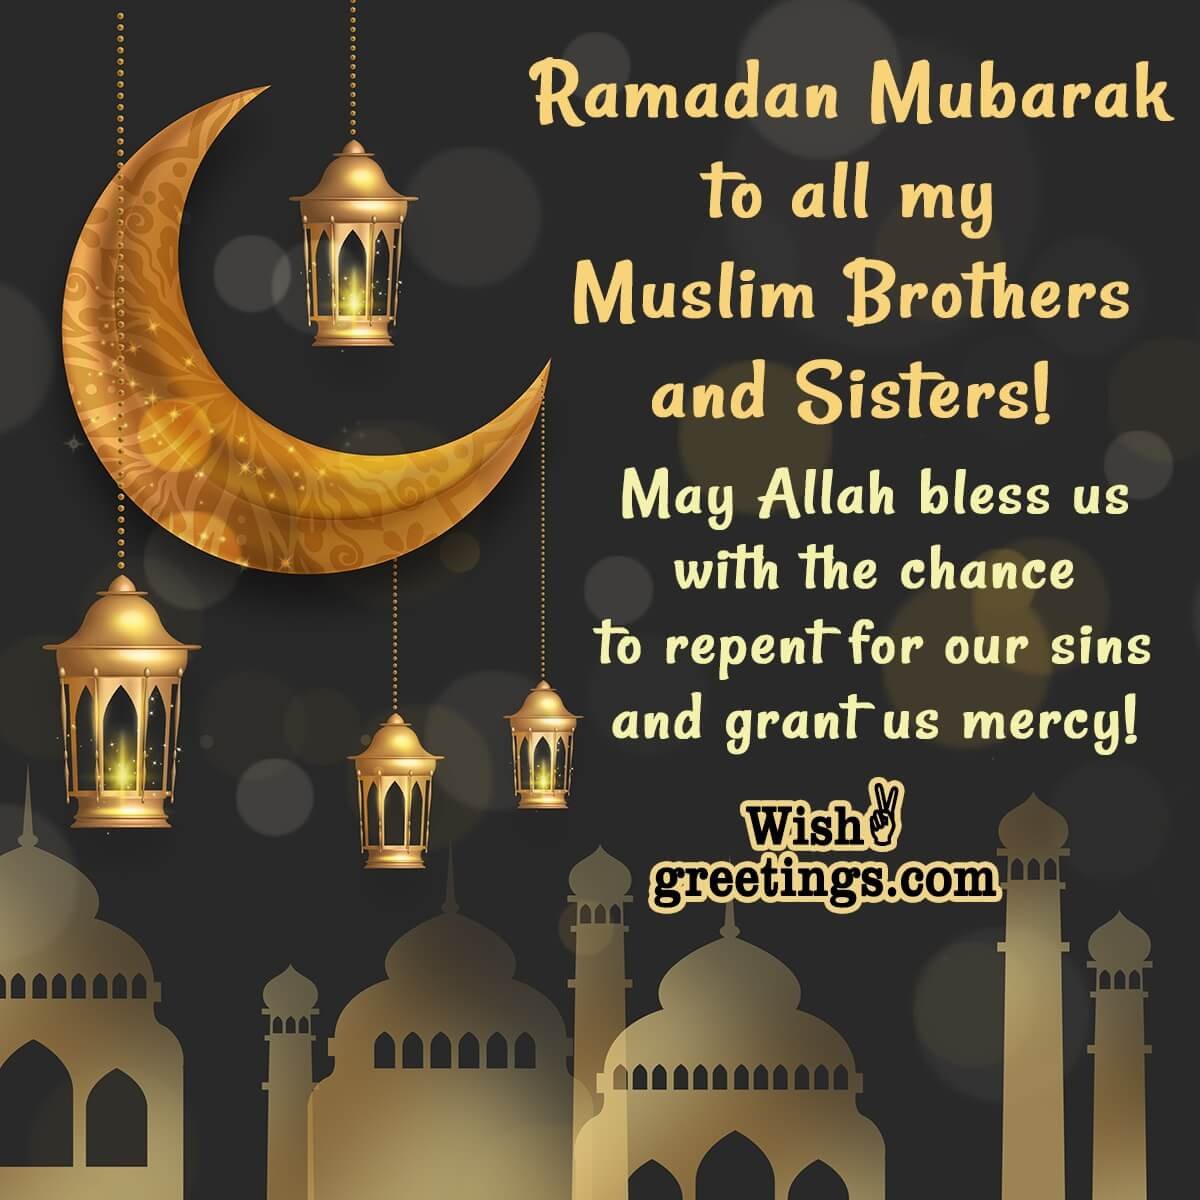 Ramadan Mubarak To All My Muslim Brothers And Sisters!